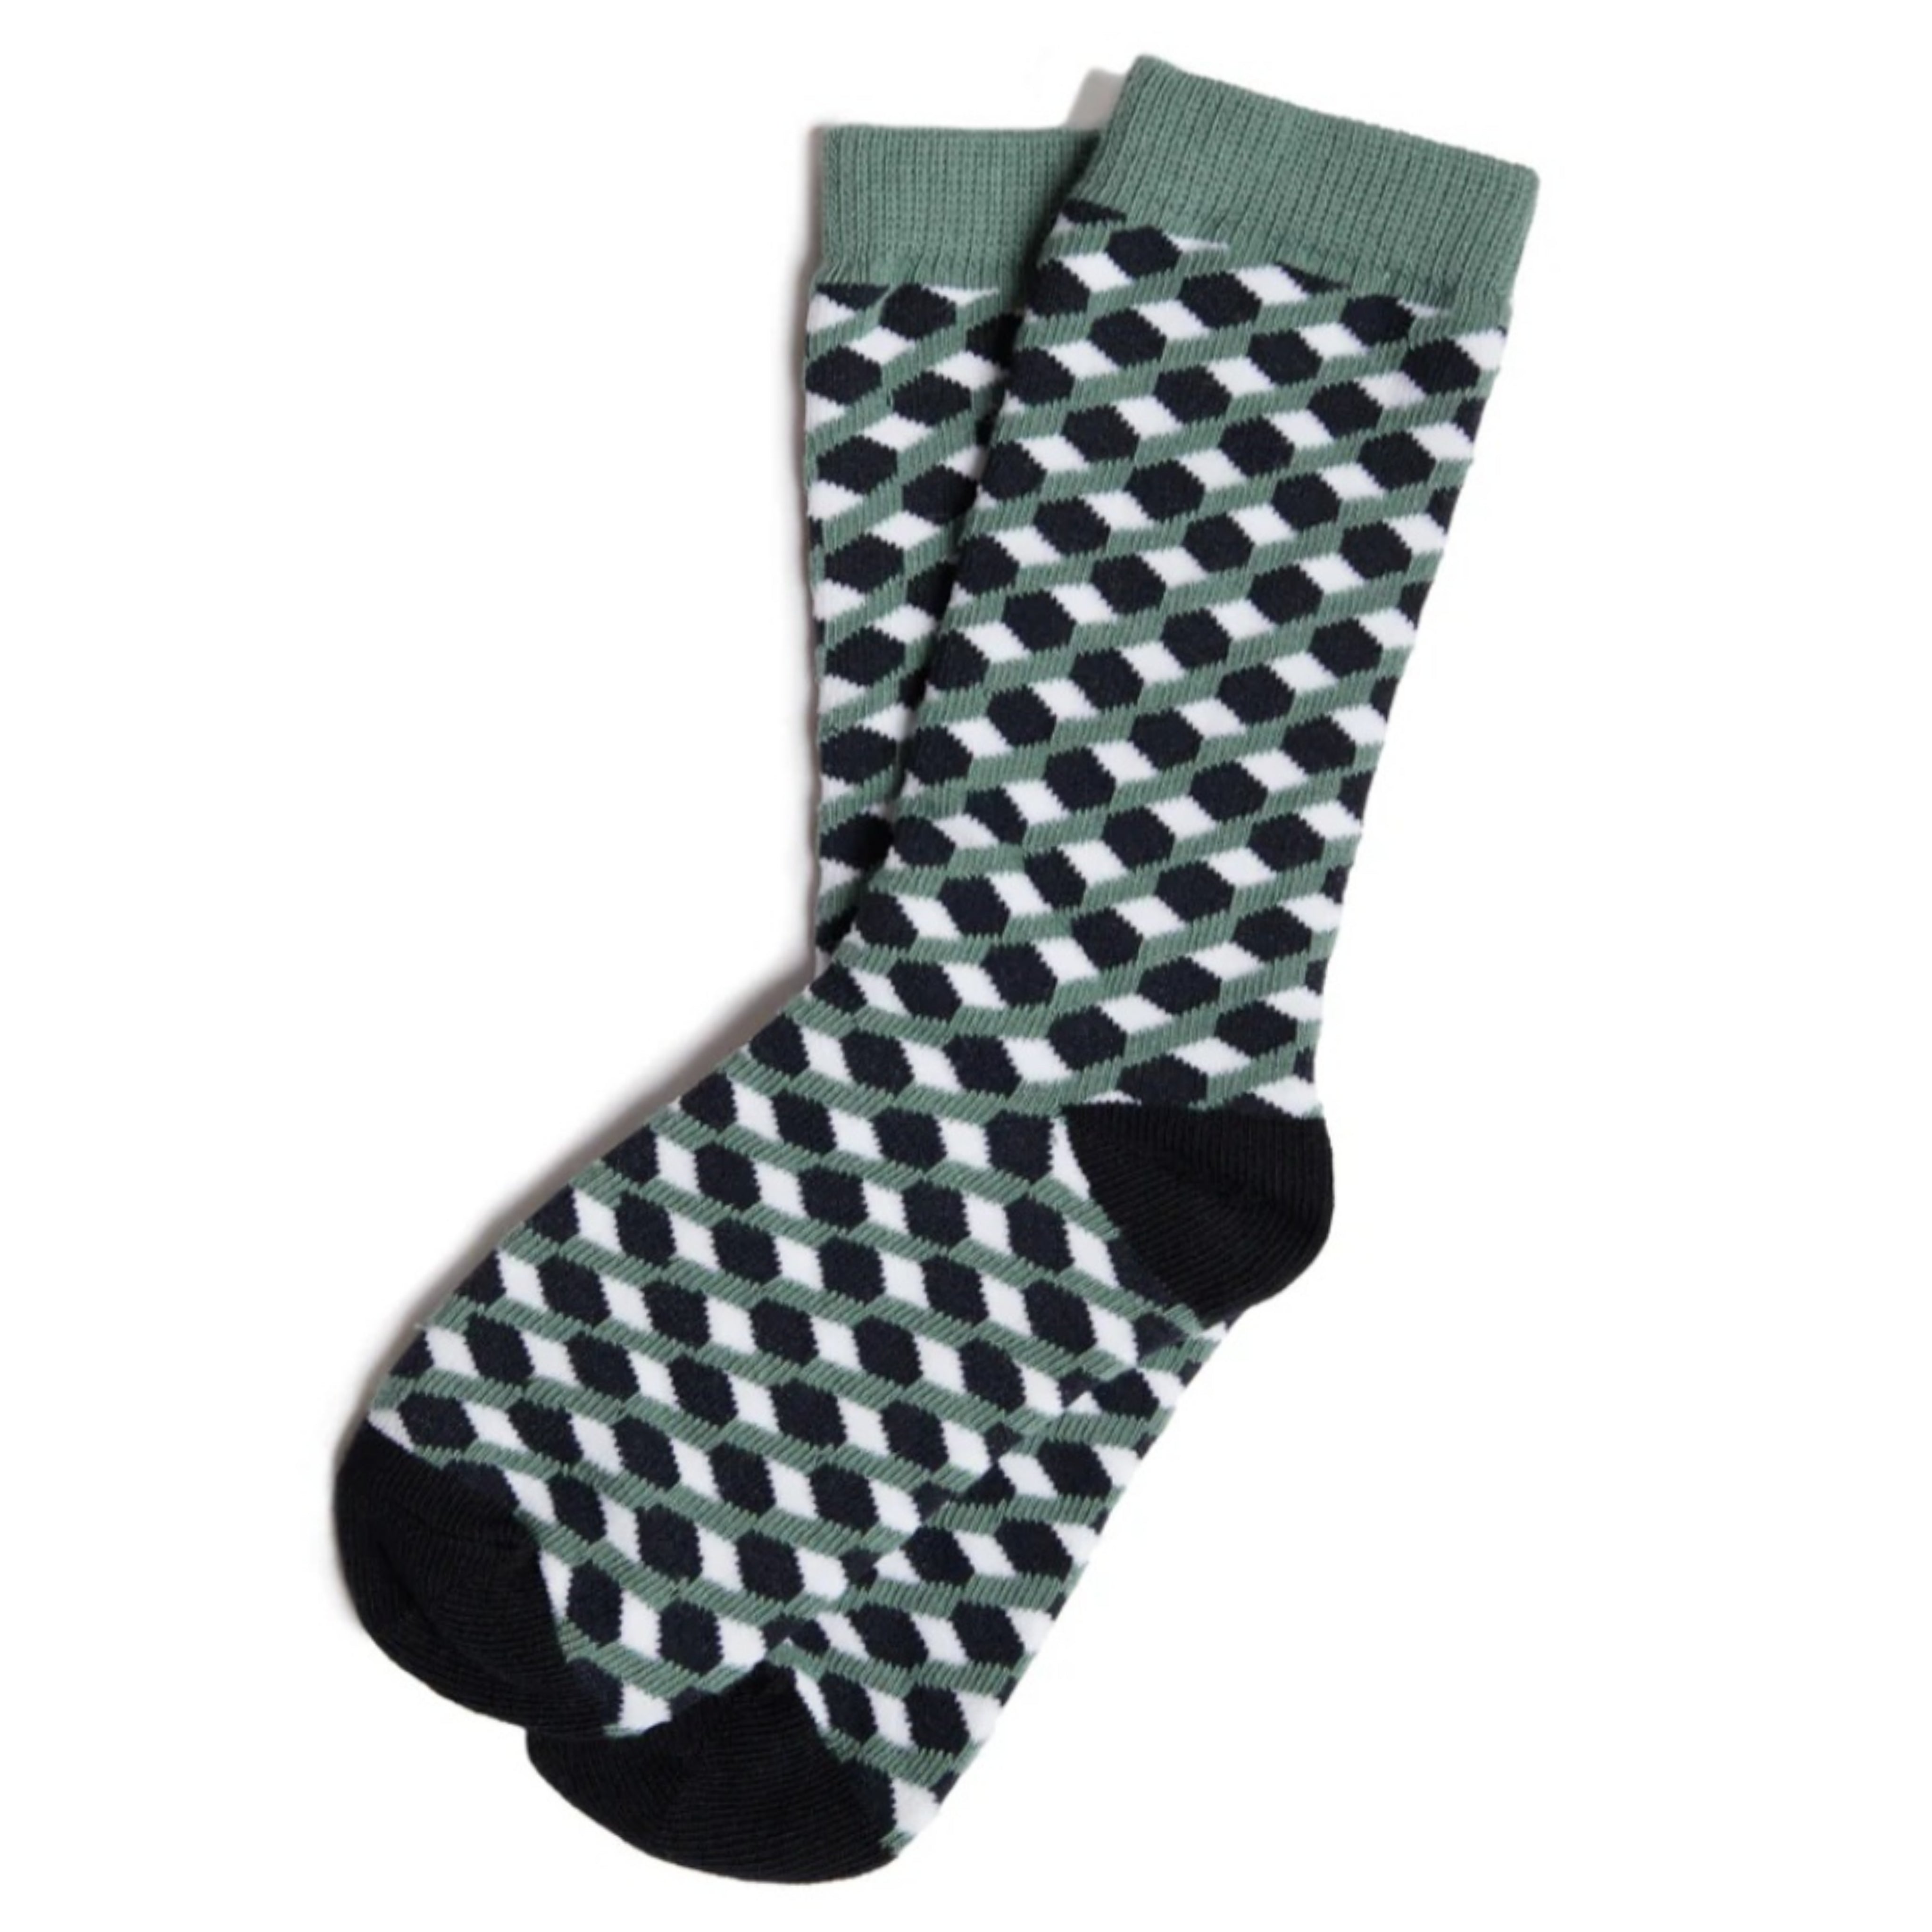 Olive Green, Black and White 3D Cubed Patterned Socks